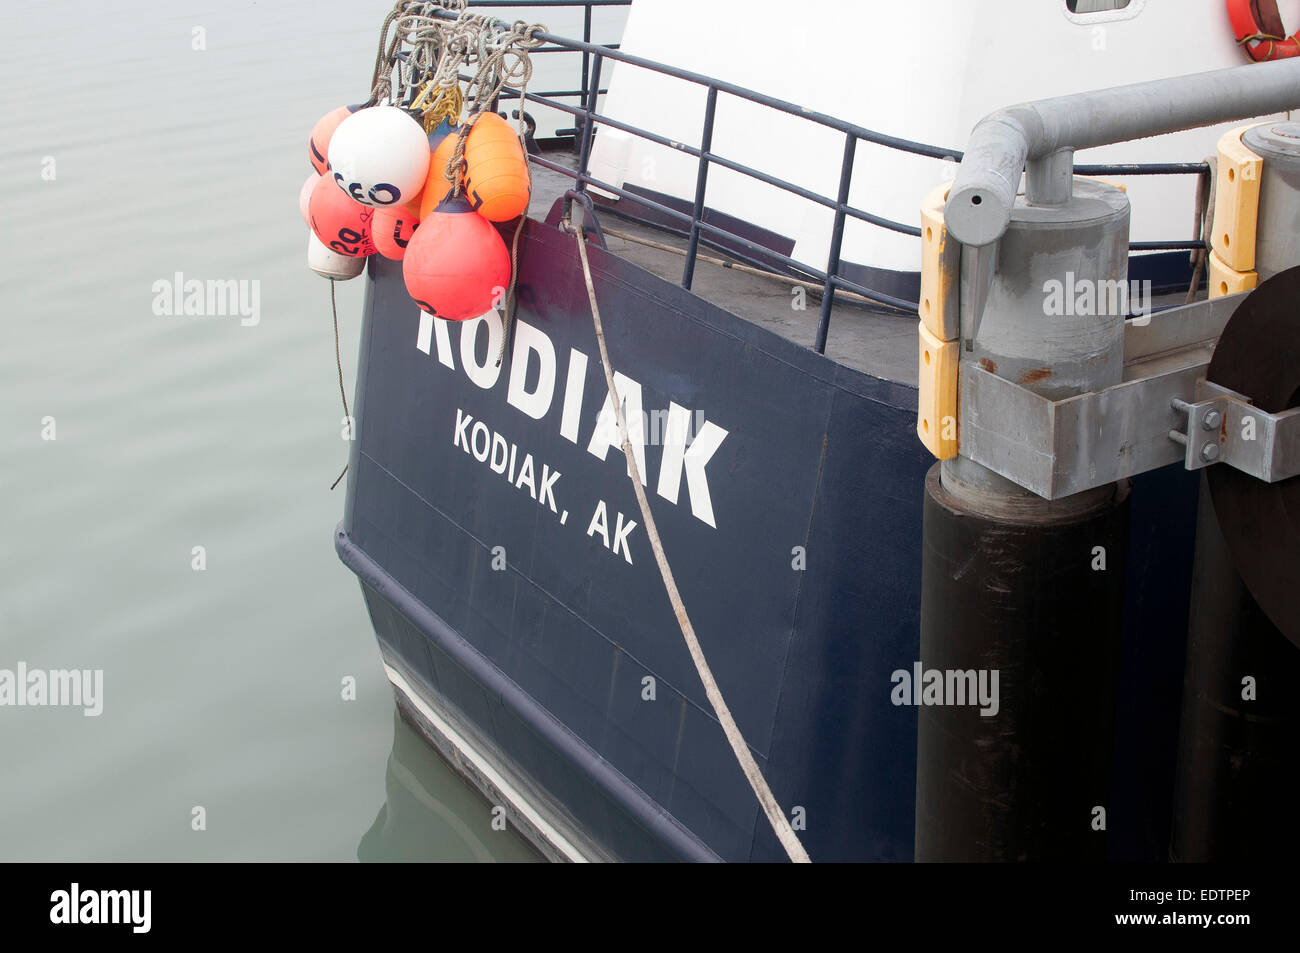 Fishing boat Kodiak at dock Stock Photo